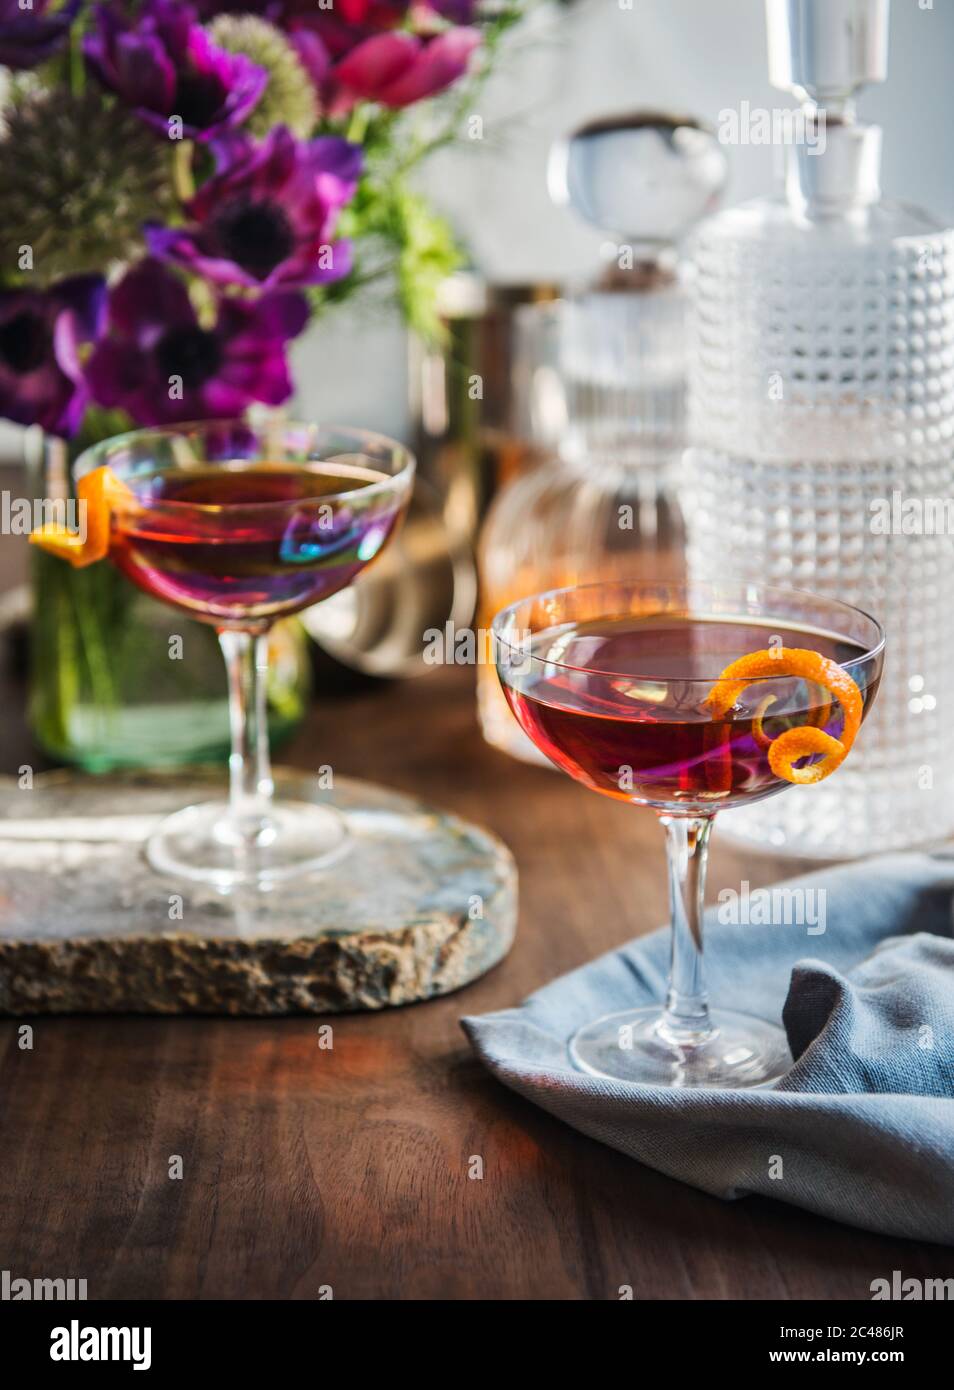 Cosmopolitan Cocktail with orange garnish Stock Photo